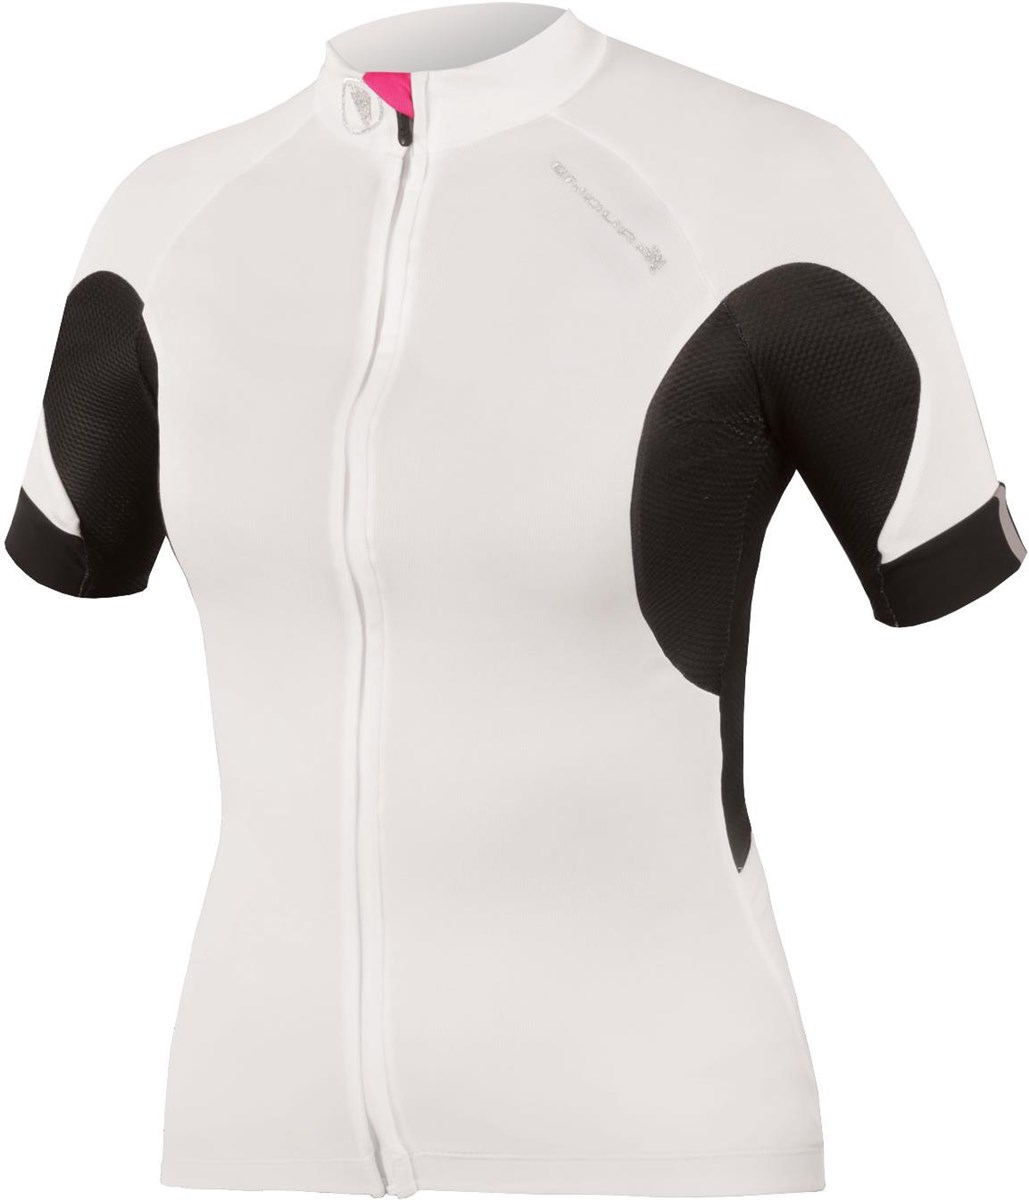 Endura FS260 Pro II Womens Short Sleeve Jersey product image